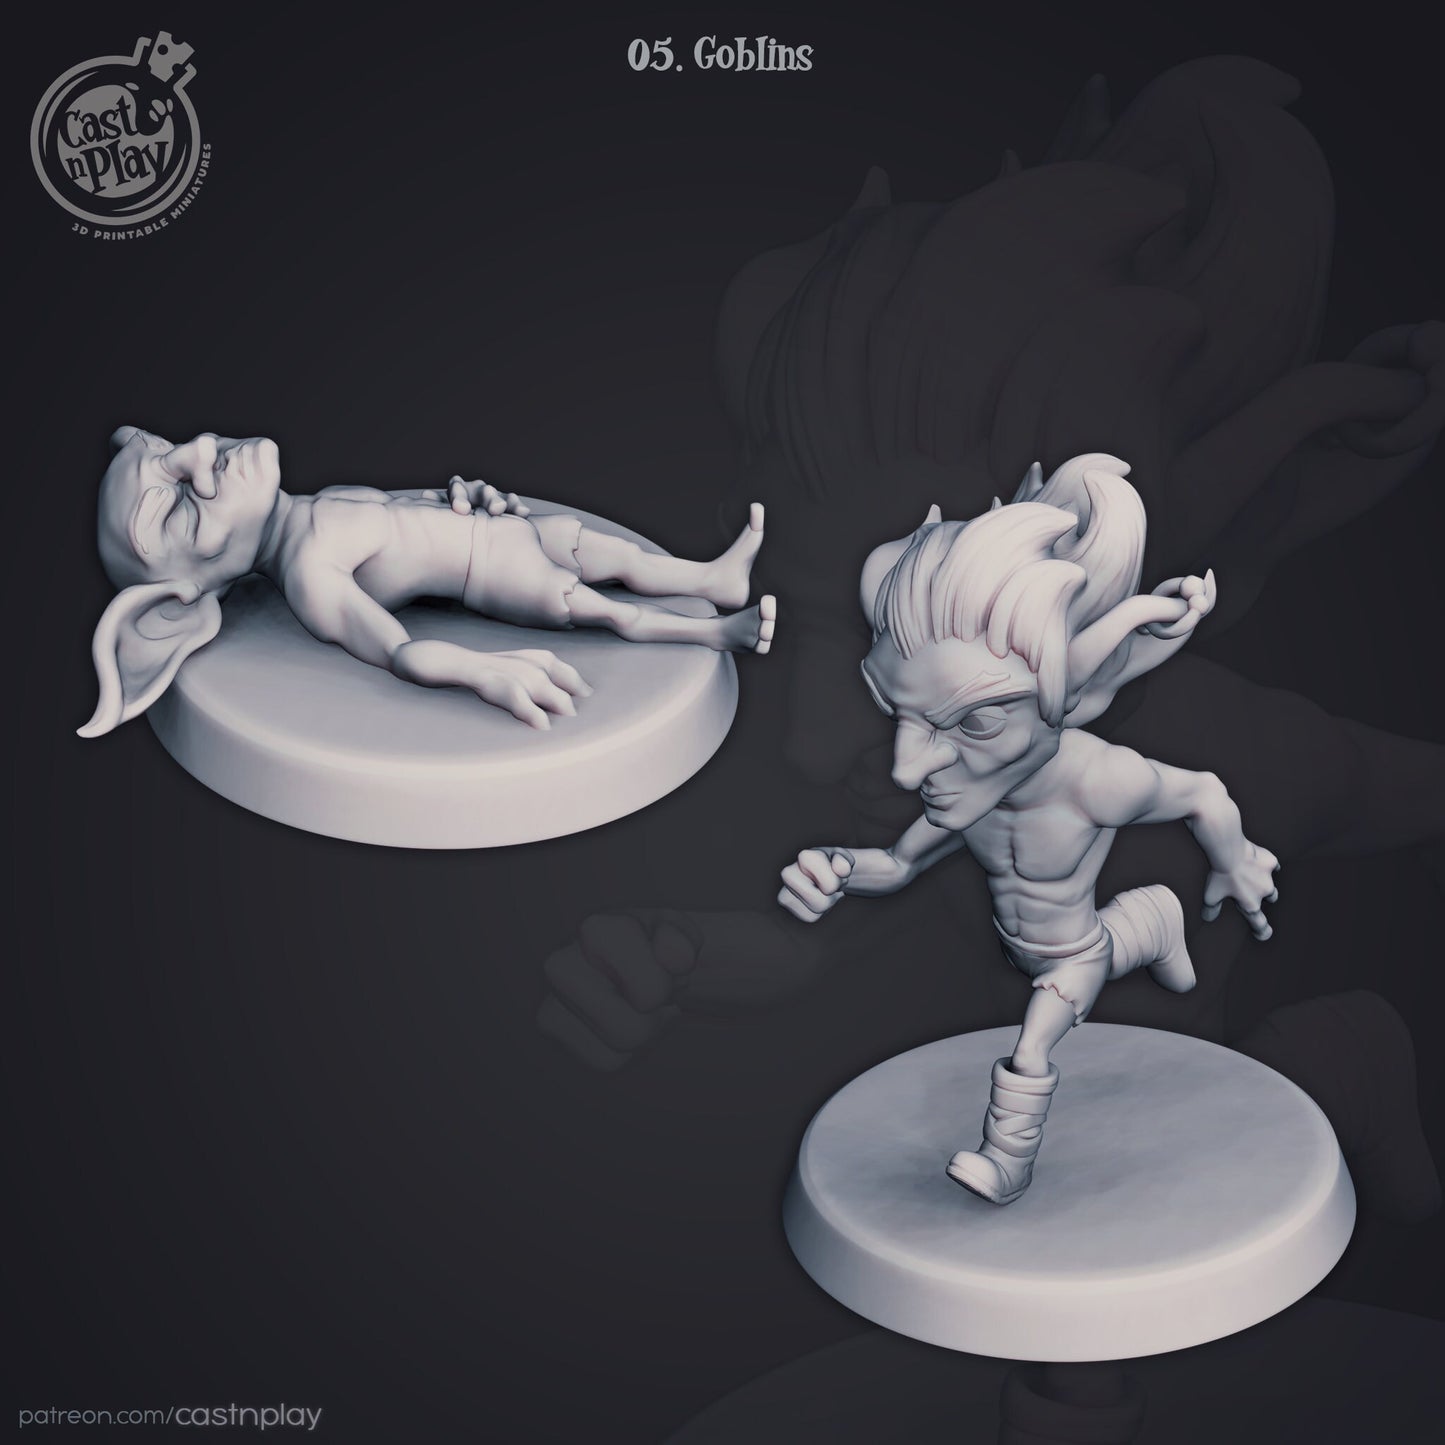 GOBLINS, by Cast n Play // 3D Print on Demand / D&D / Pathfinder / RPG